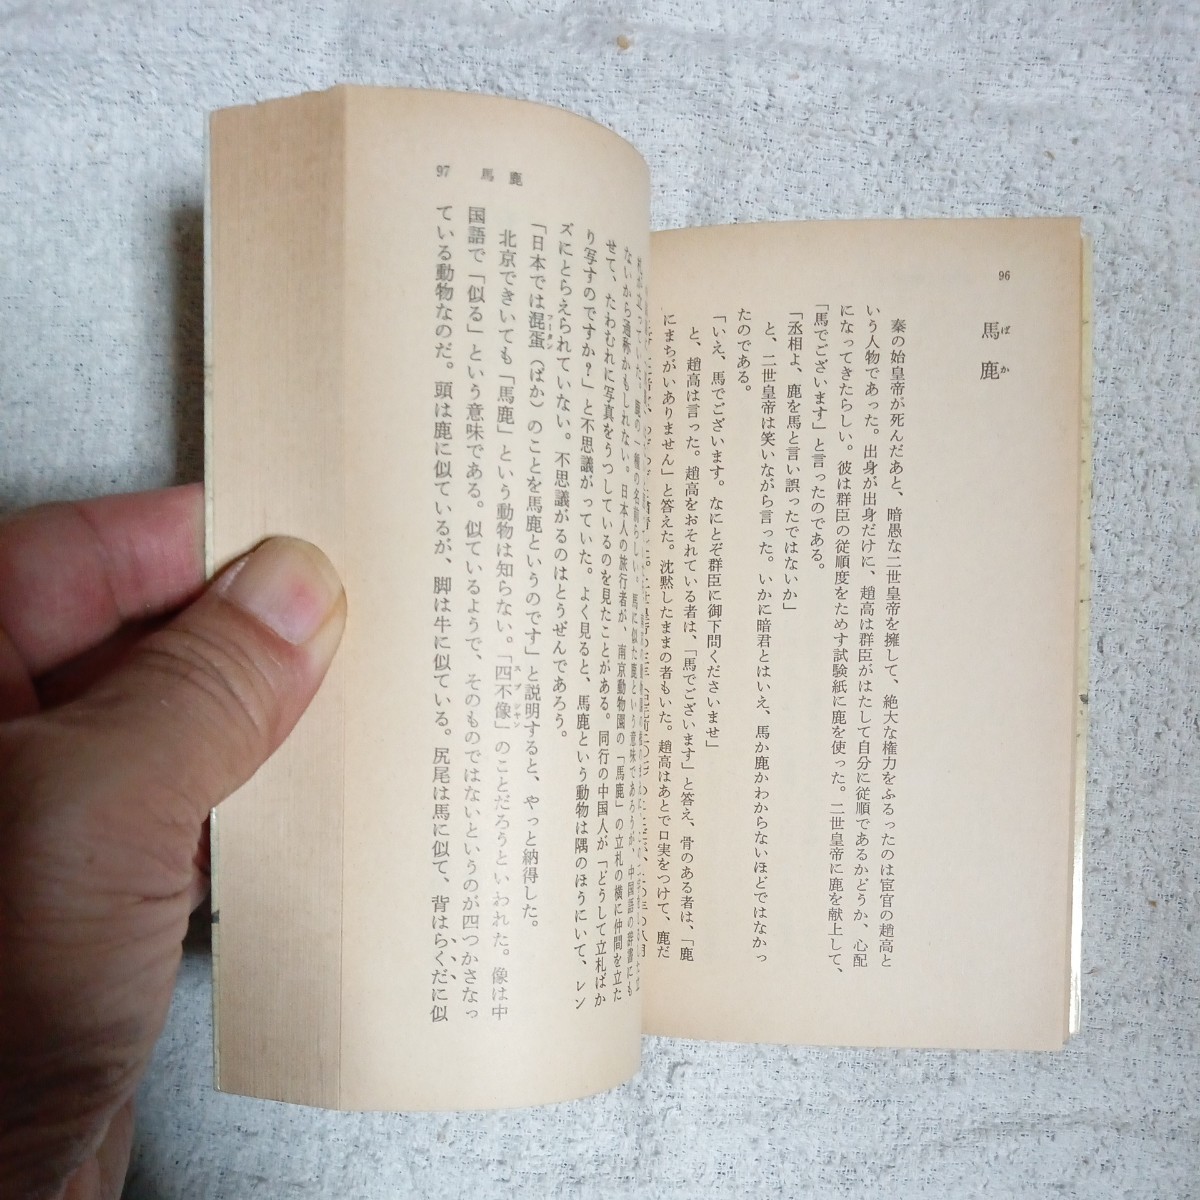 .. запись (.....) China название . сборник ( средний . библиотека ) Chin Shunshin с некоторыми замечаниями Junk 9784122013636